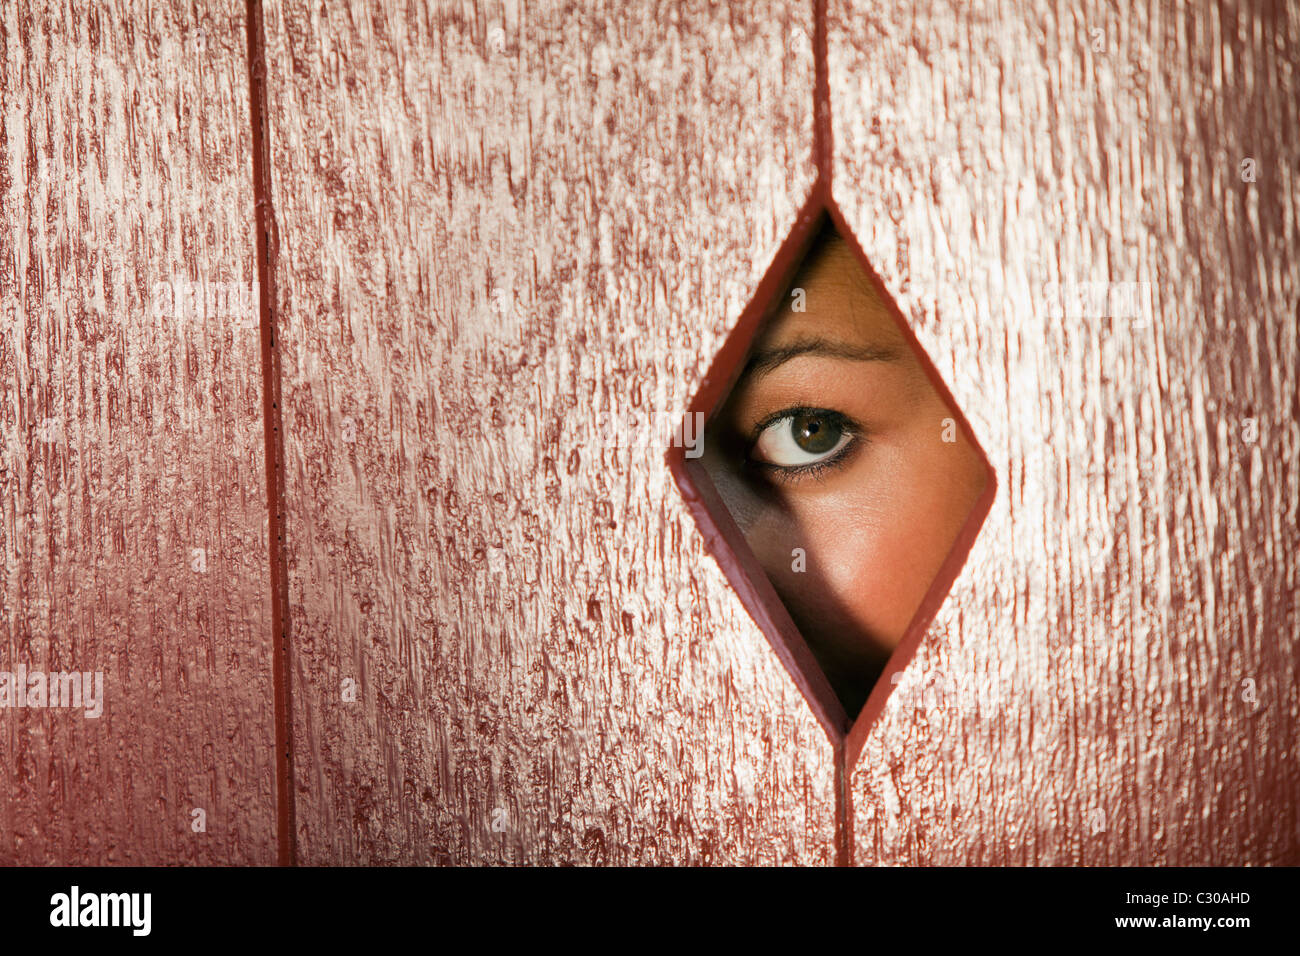 Woman peeks through a diamond shaped hole in a wall. Horizontal shot. Stock Photo